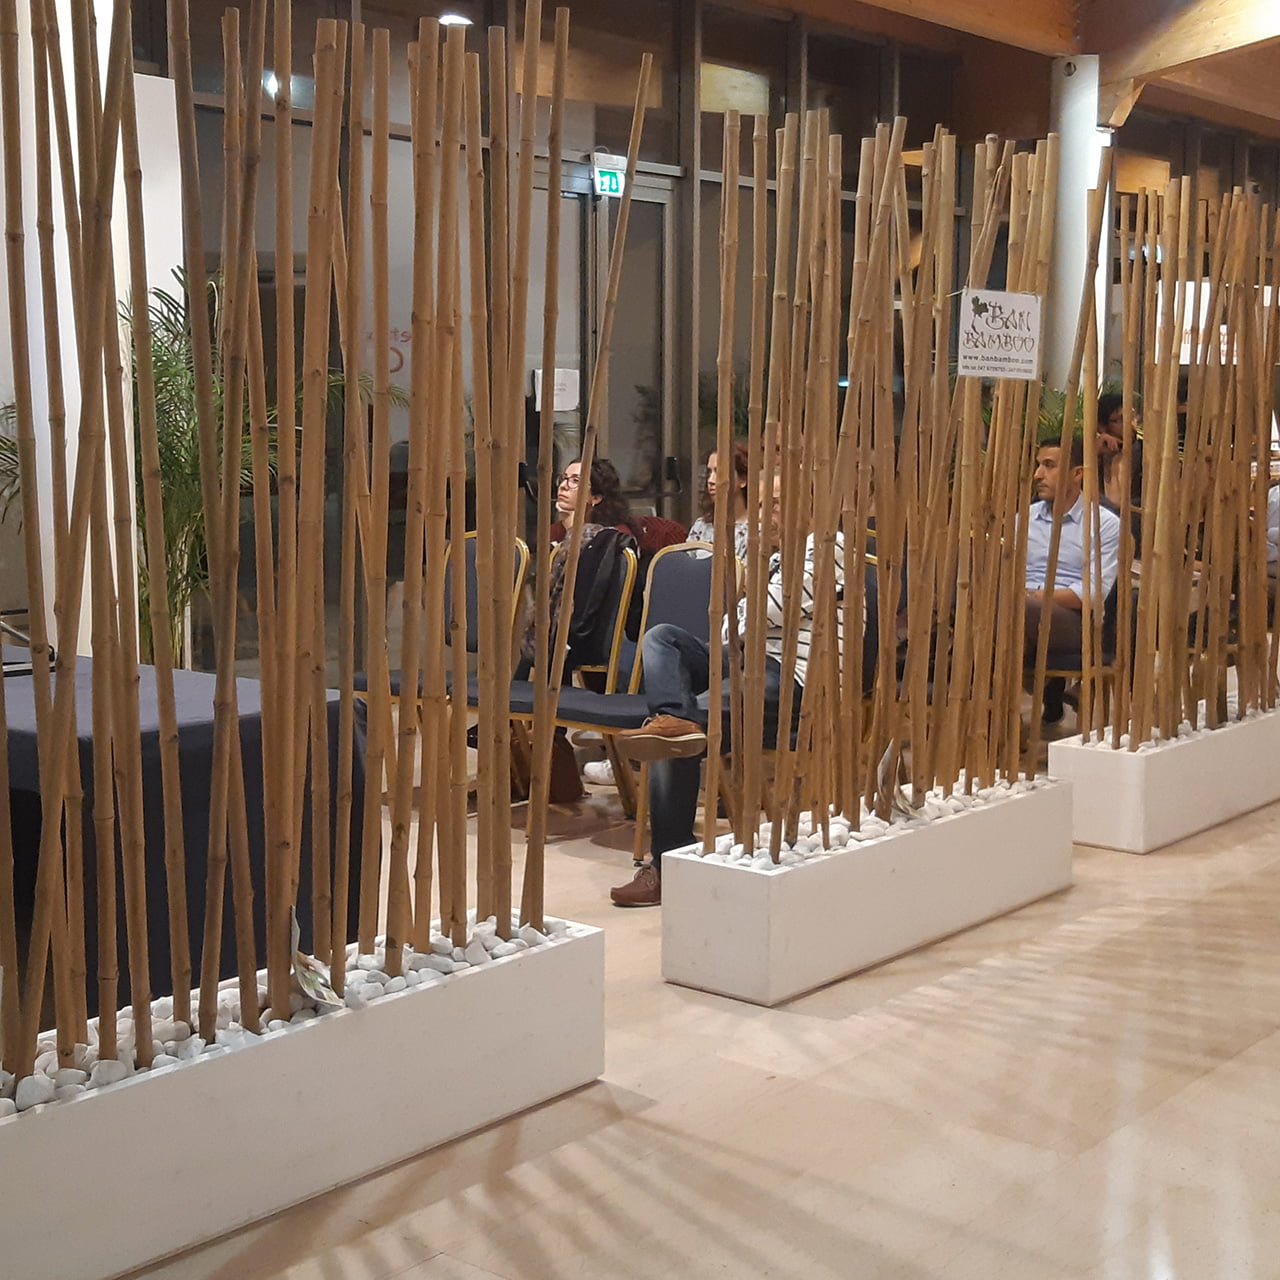 Canne di bambu per massaggio